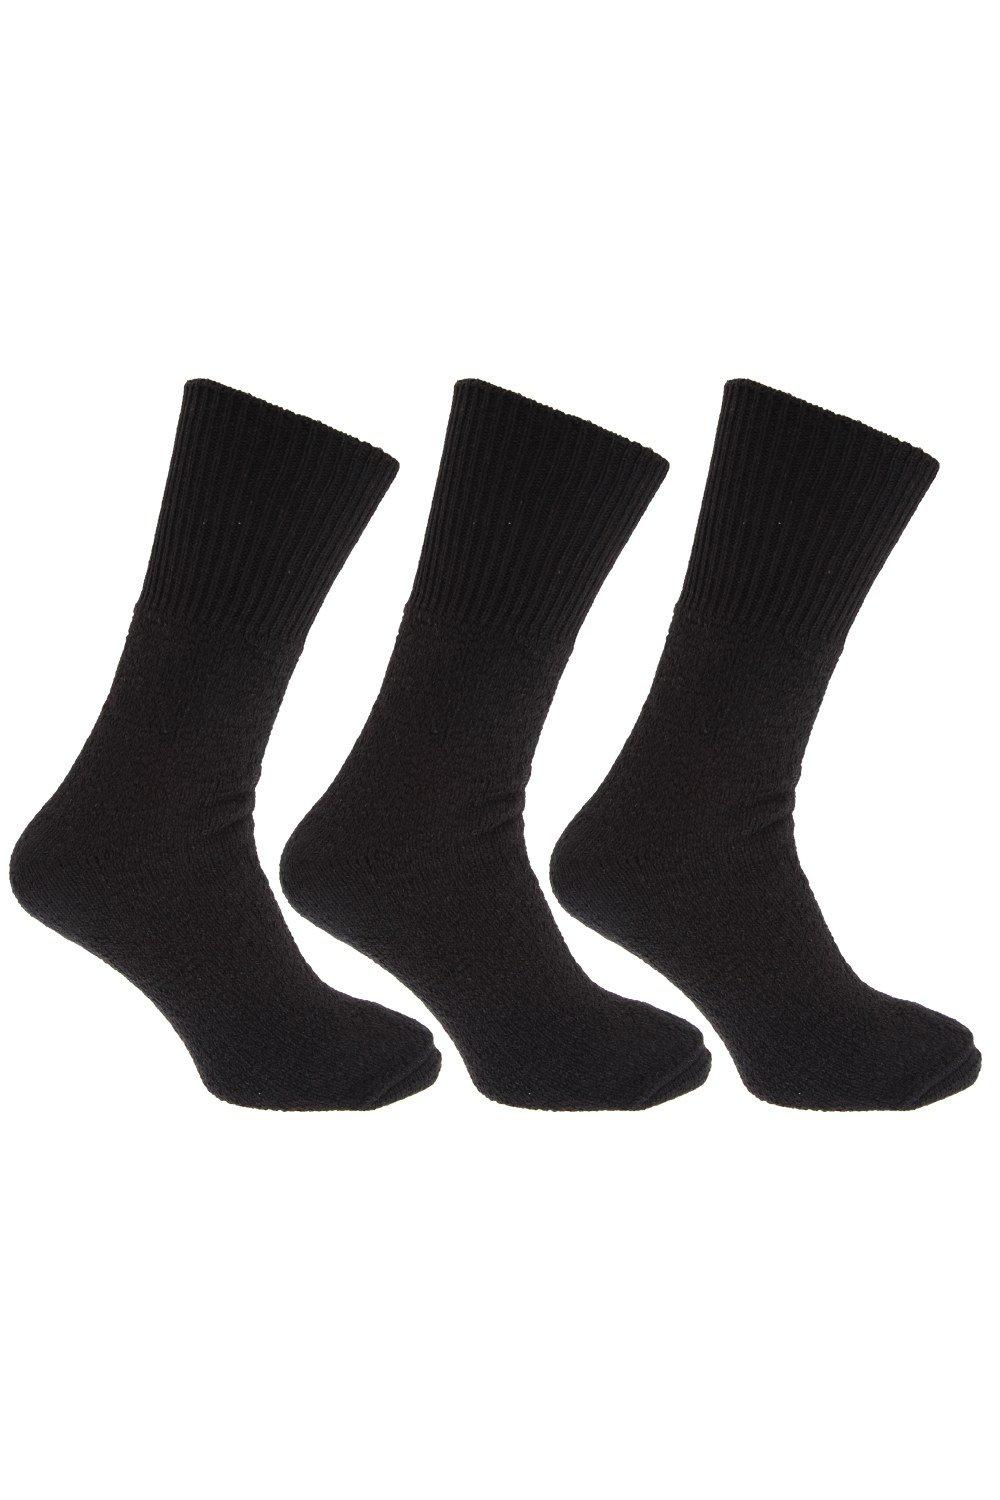 Thermal Non Elastic Wool Blend Socks (2.1 Tog) (Pack Of 3)